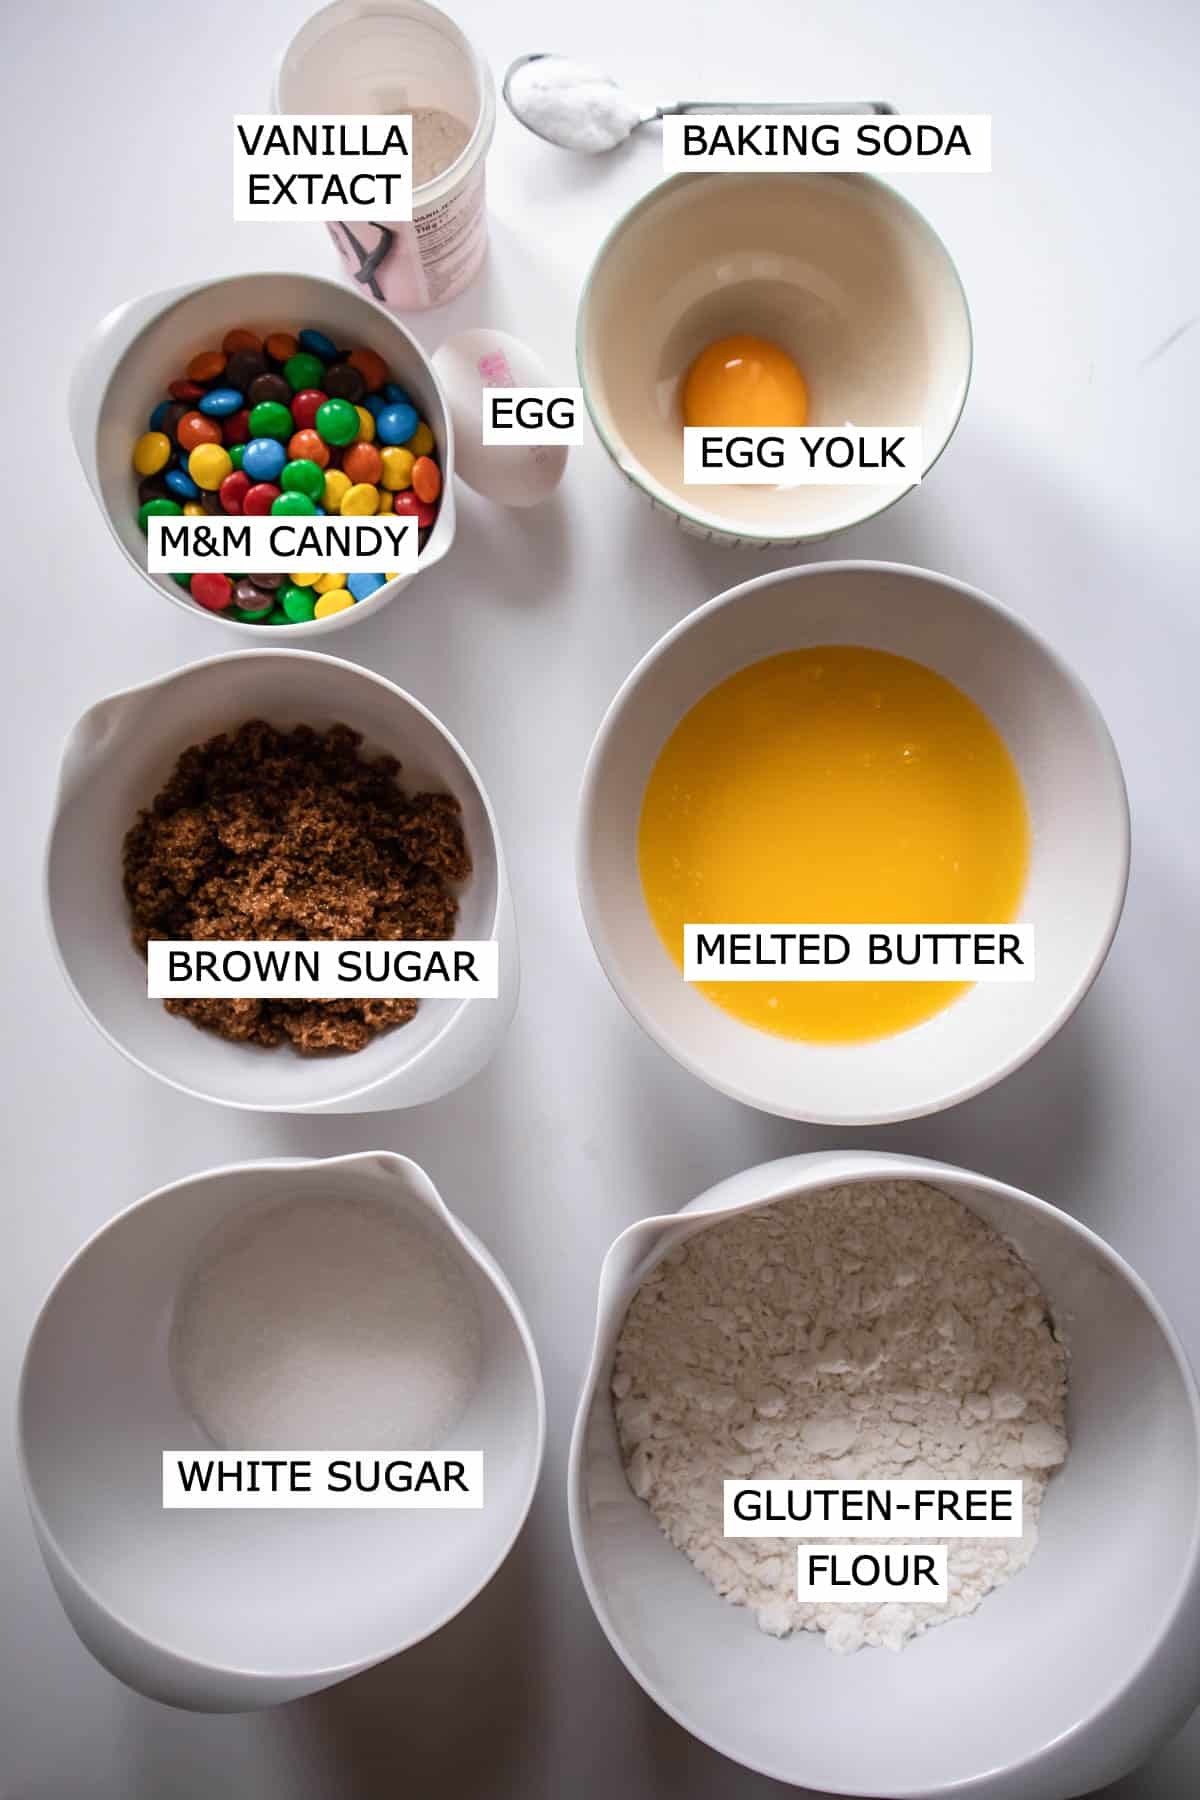 Ingredients: Vanilla extract, baking soda, M&M candy, egg, egg yolk, brown sugar, melted butter, white sugar, gluten-free flour.